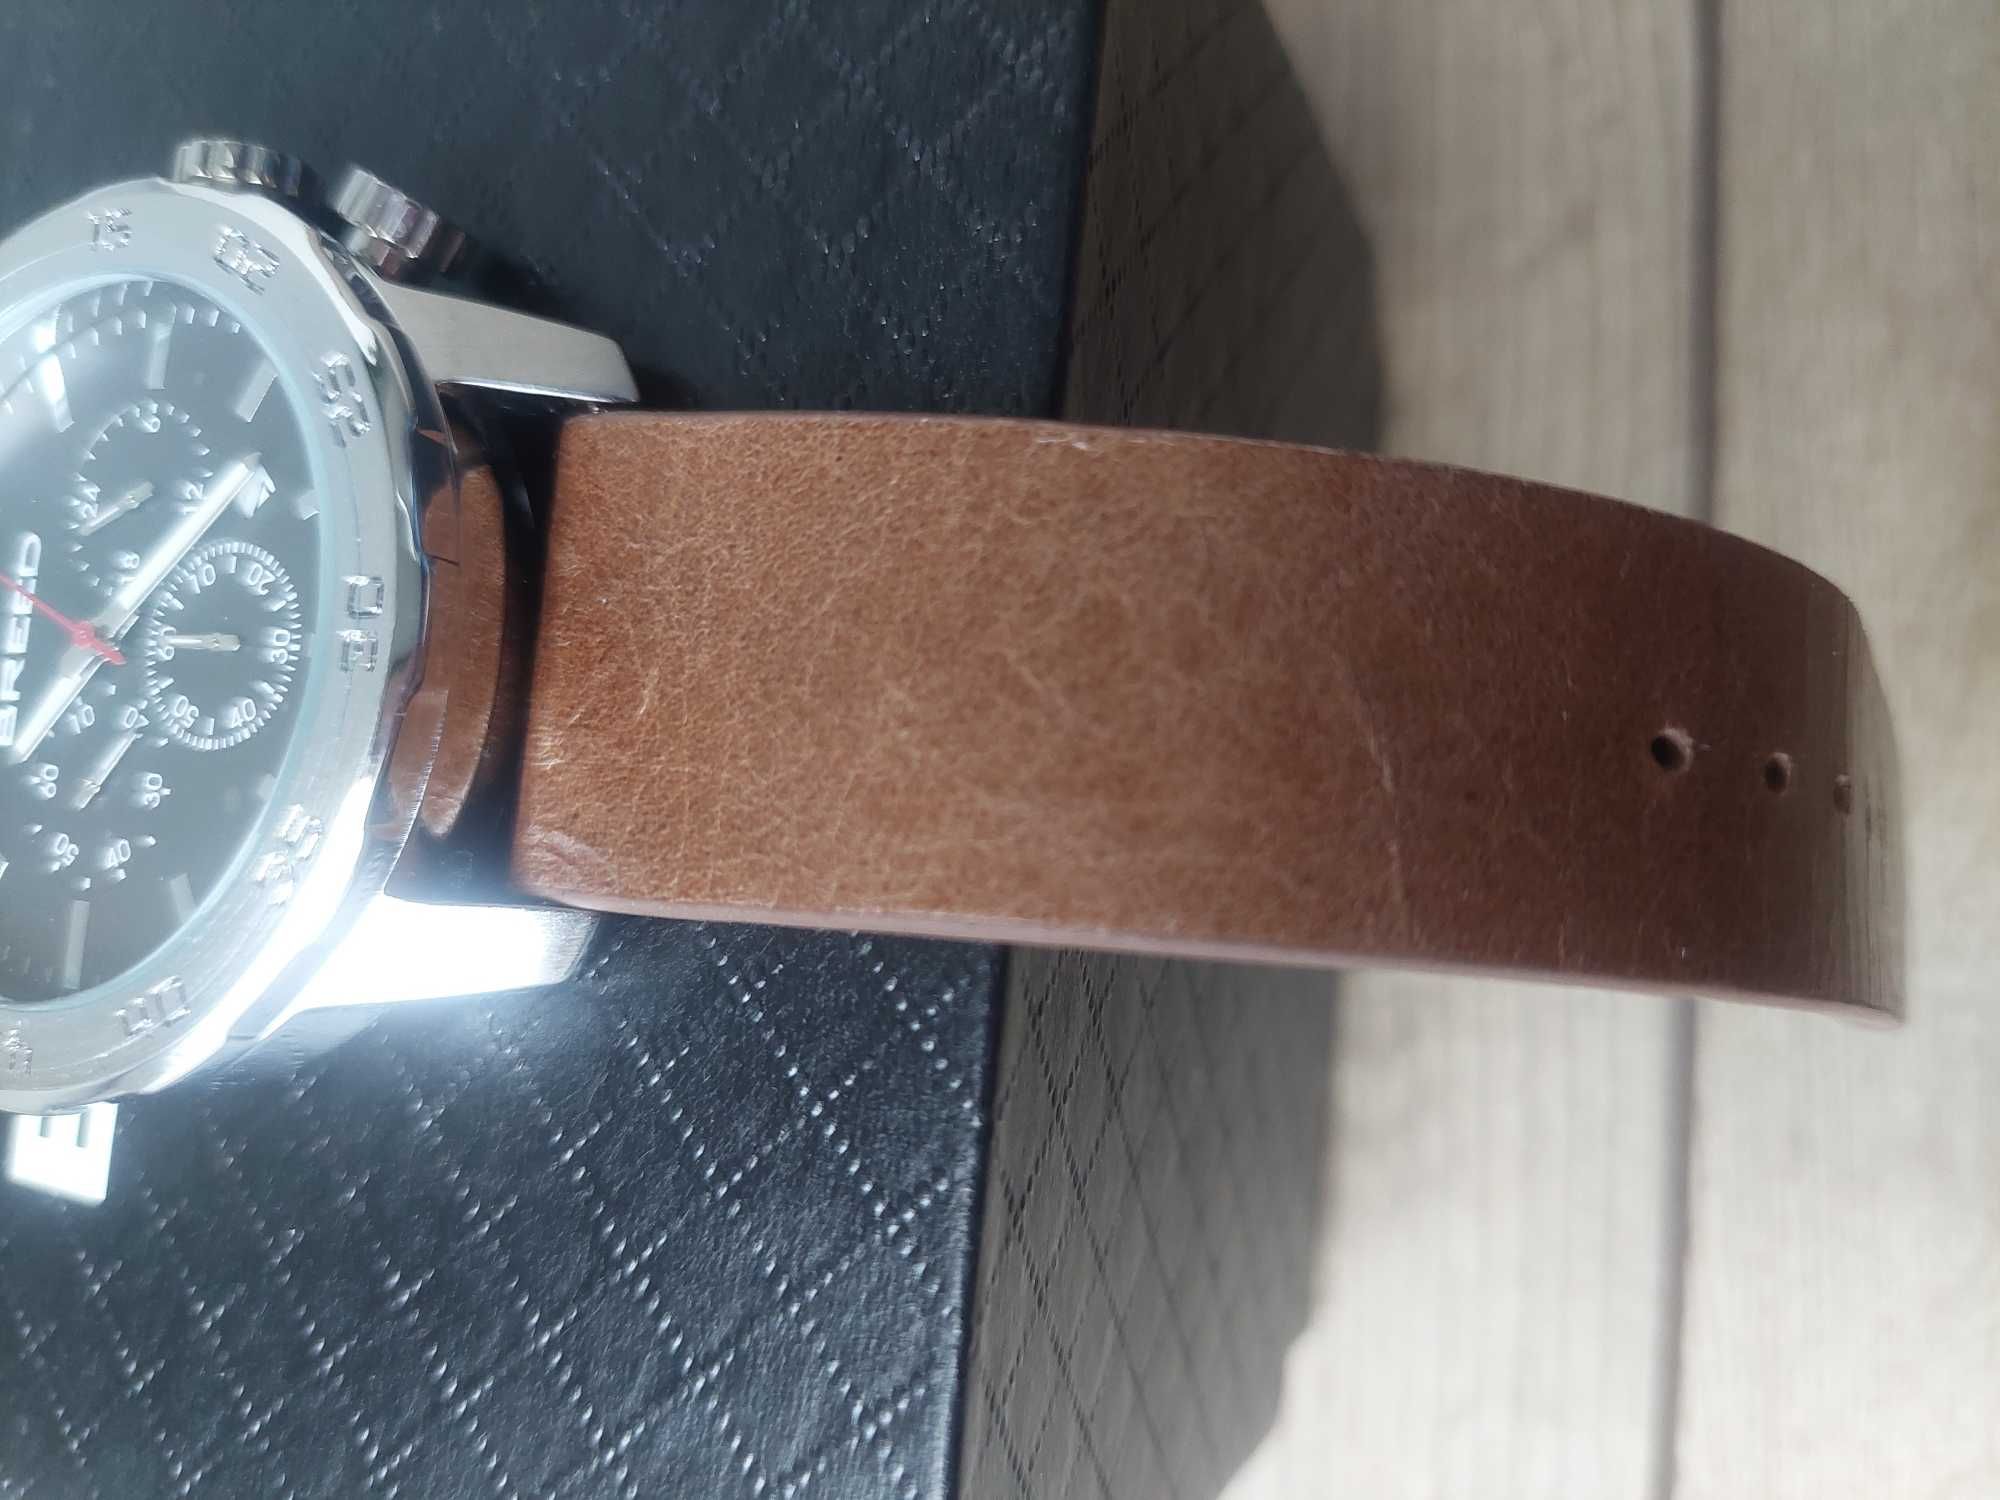 zegarek męski marki Breed, brązowy pasek